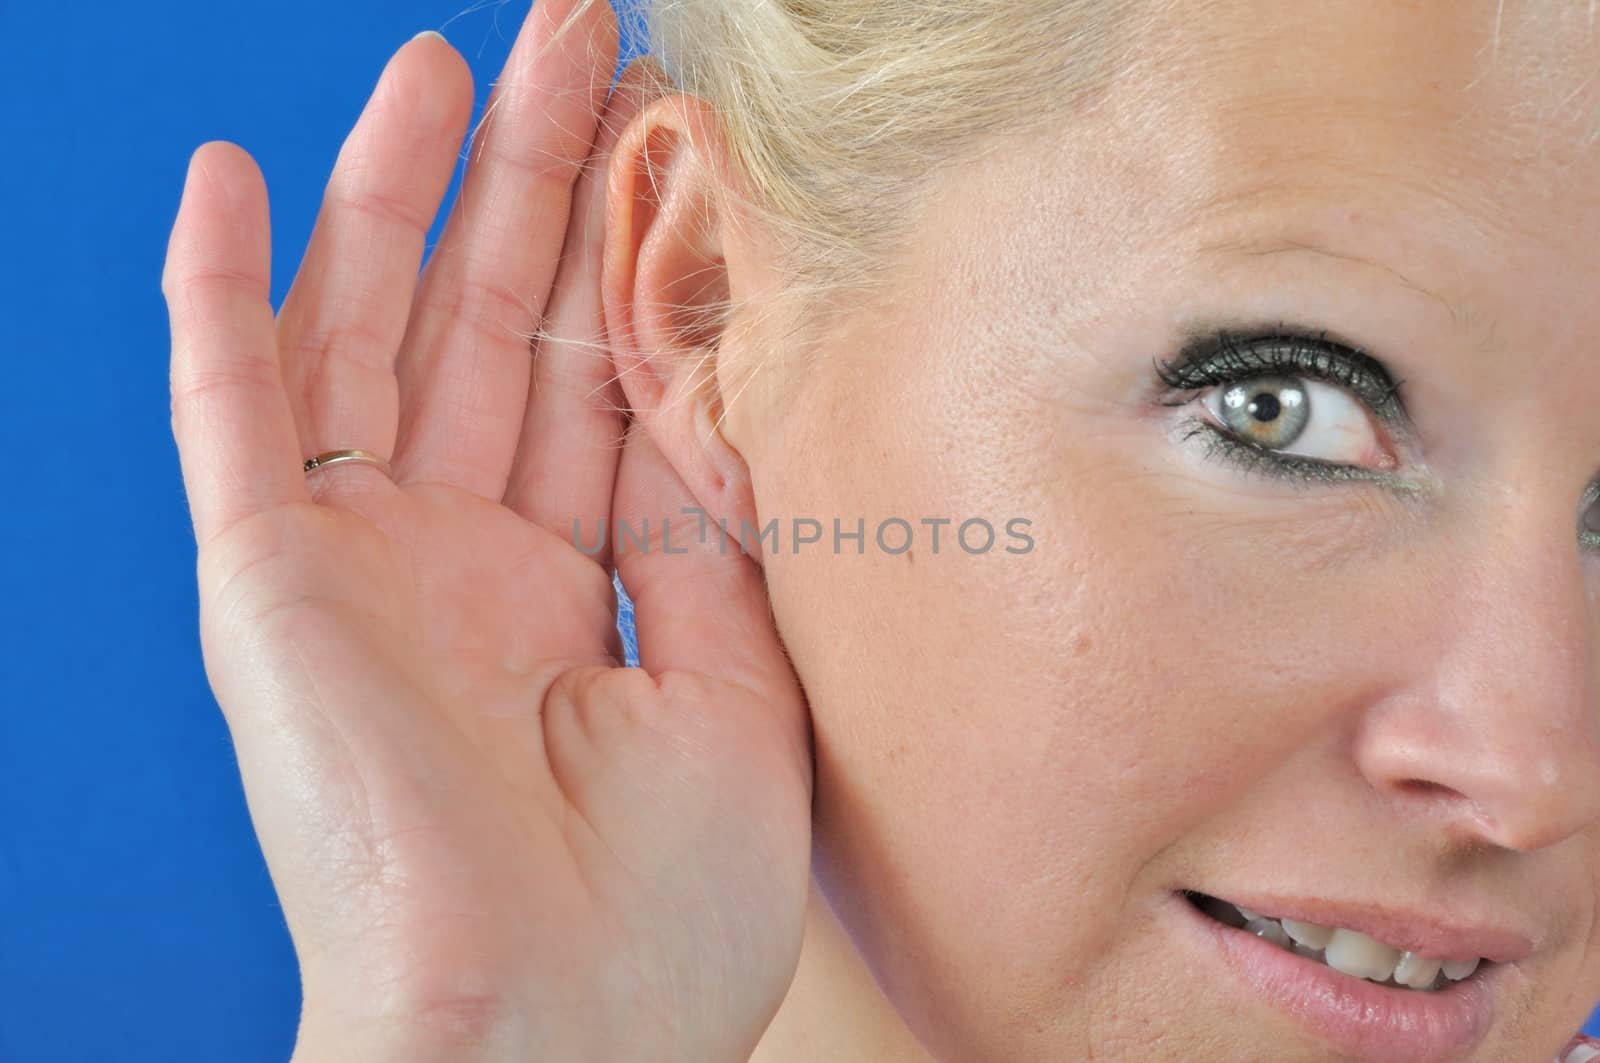 Woman hearing